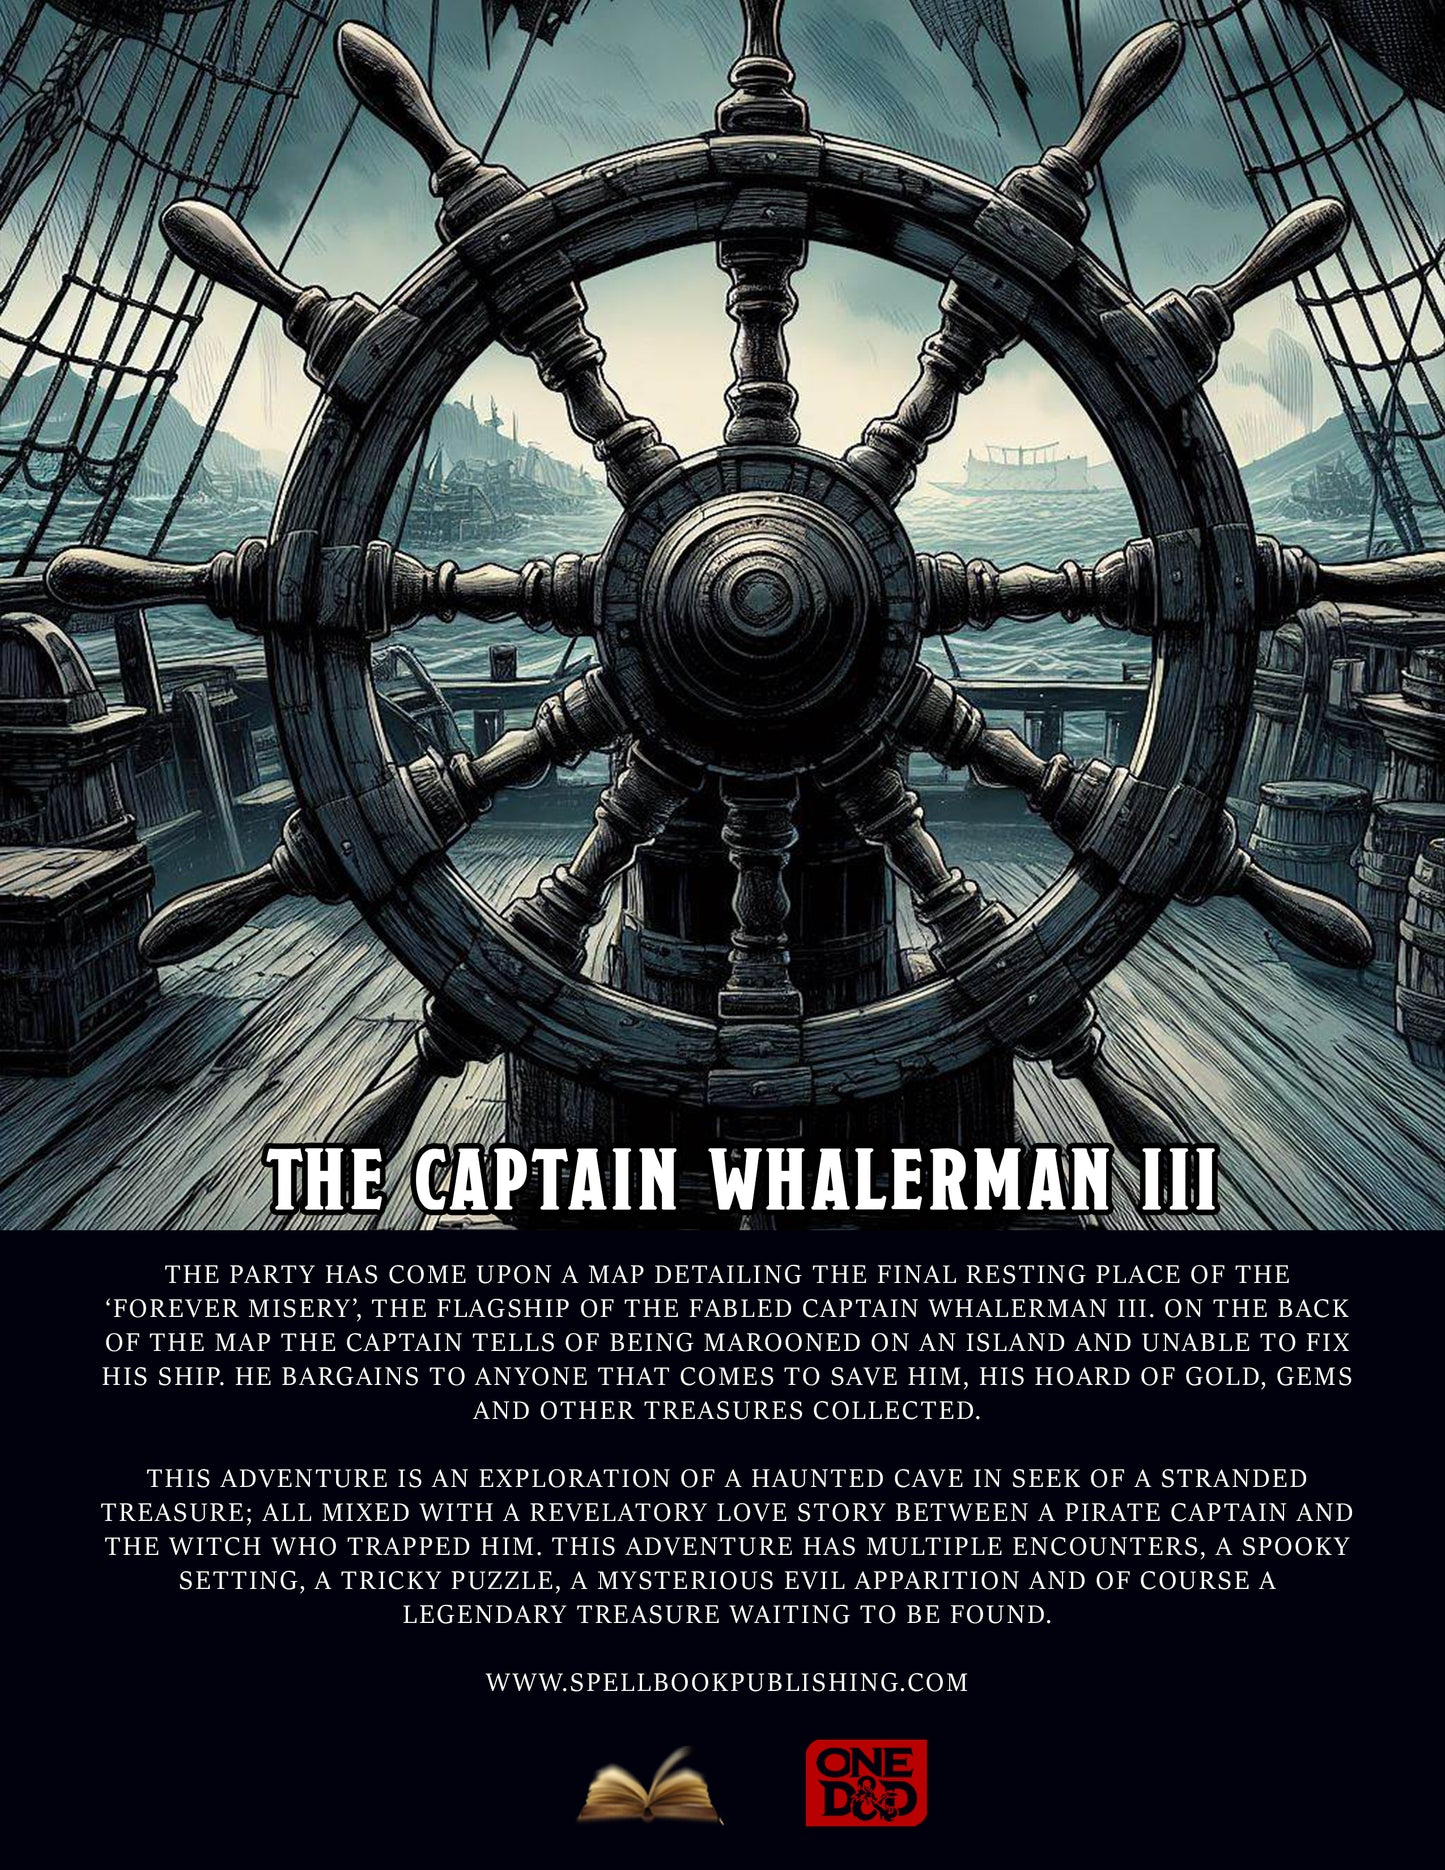 The Whalerman III